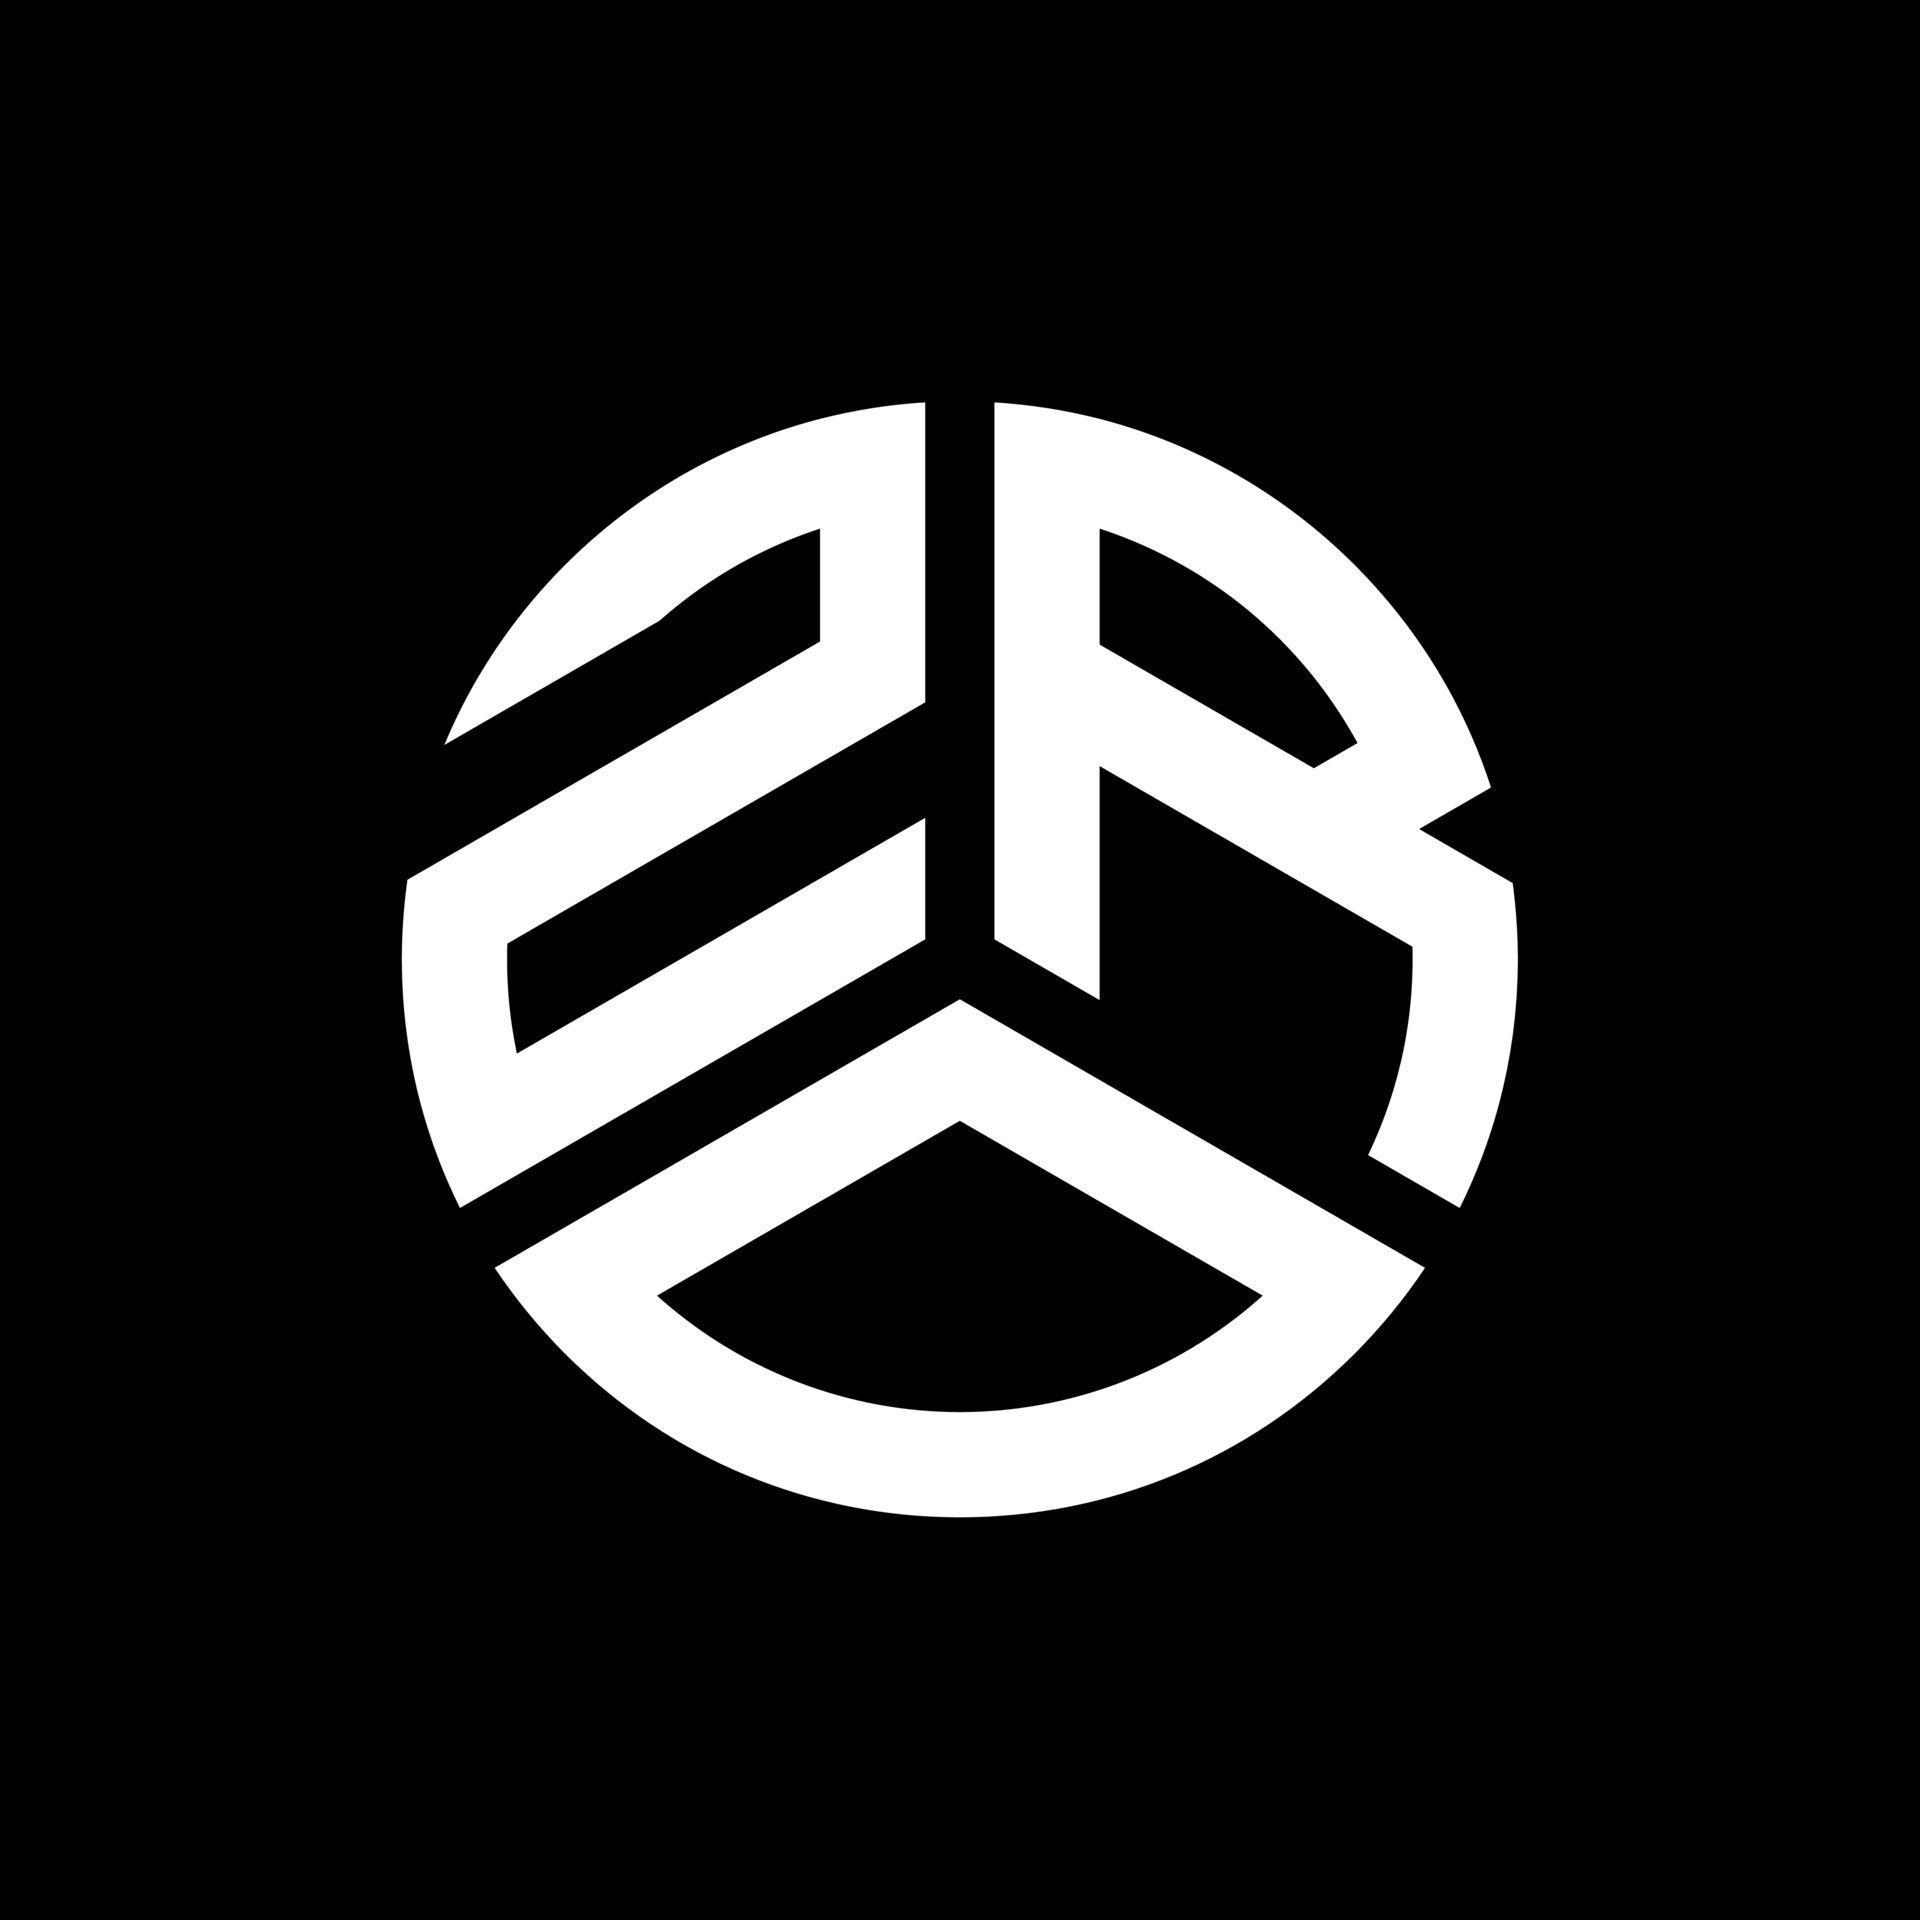 zro brief logo ontwerp op zwarte achtergrond. zro creatieve initialen brief logo concept. zro brief ontwerp. vector